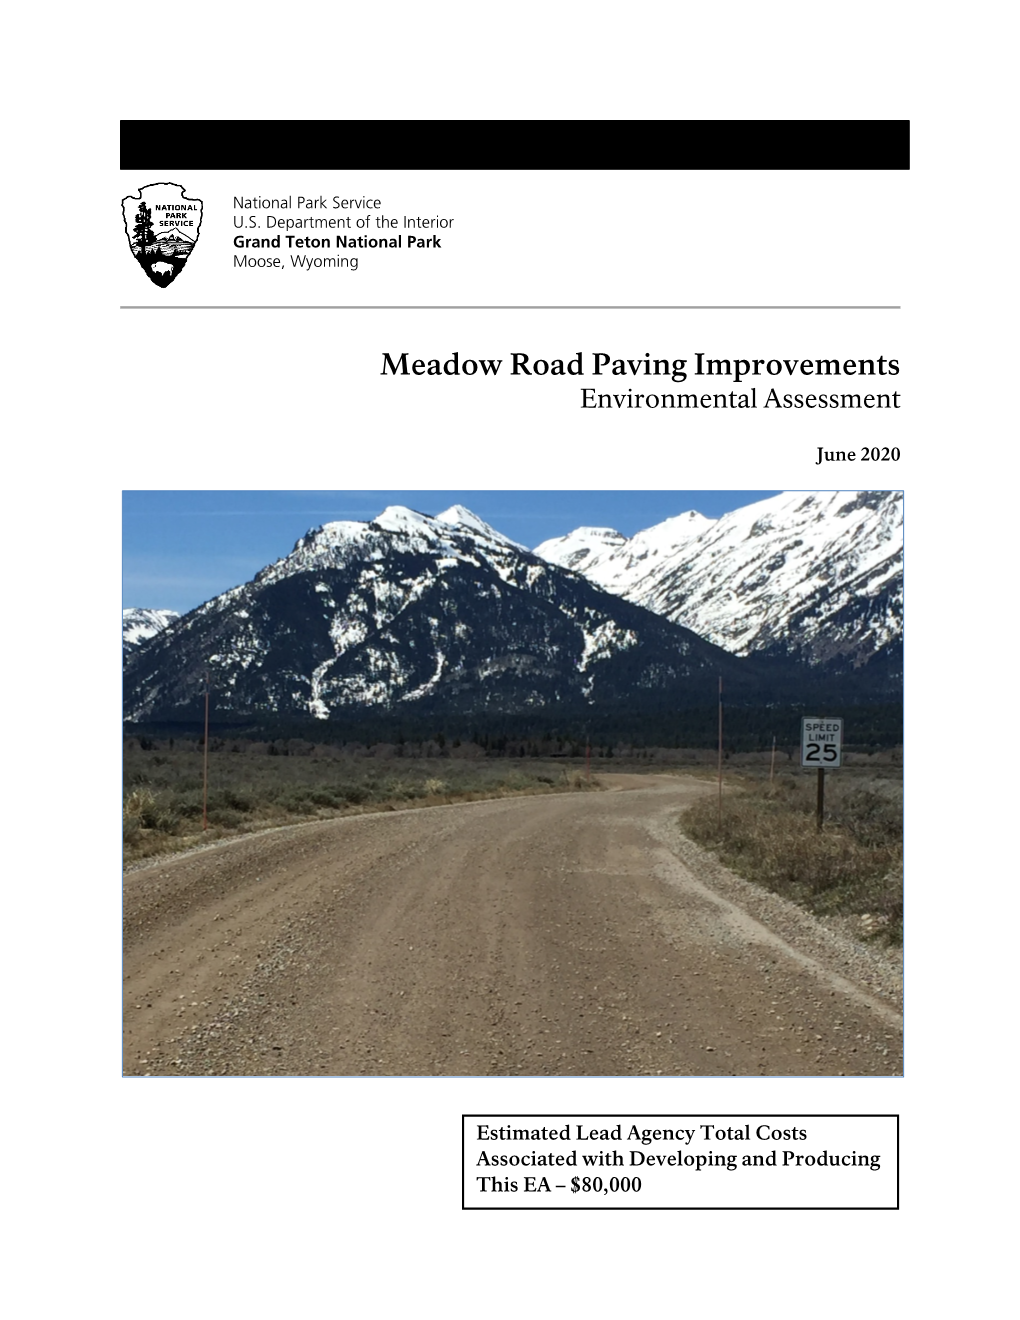 Meadow Road Paving Improvements Environmental Assessment